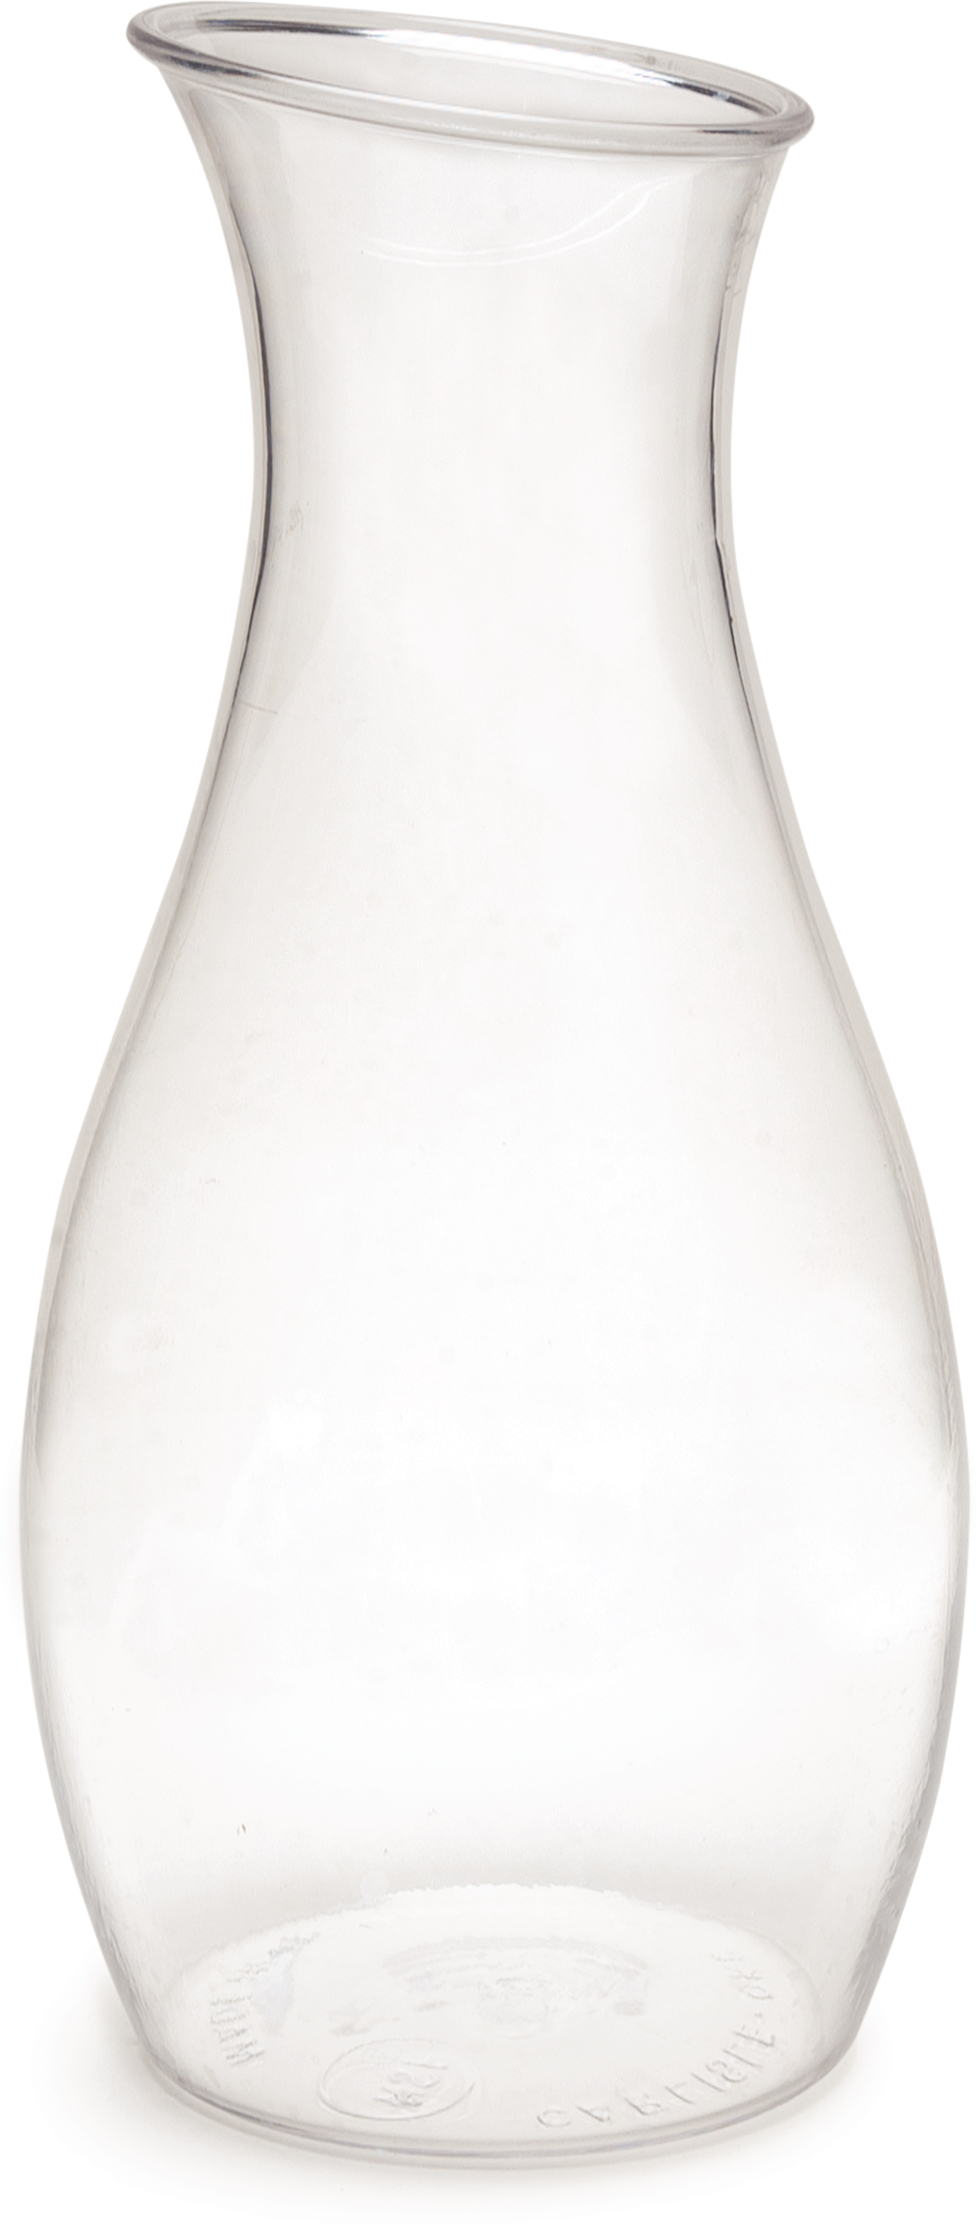 Carafe 1.5 Liter - Clear